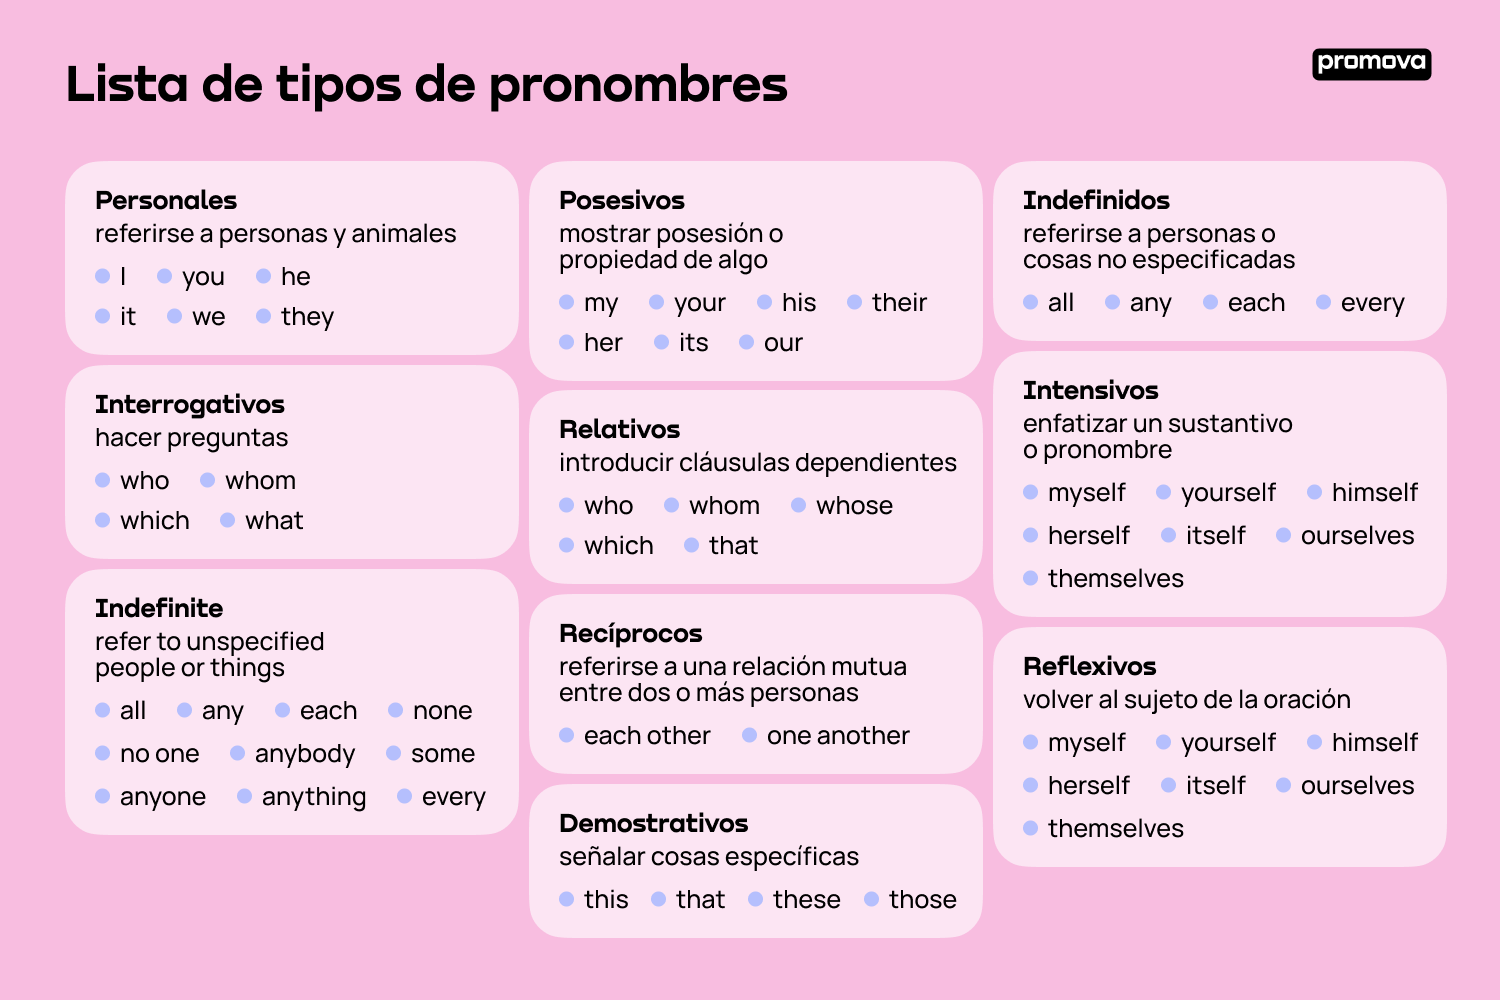 Lista completa de pronombres en inglés: Guía para estudiantes